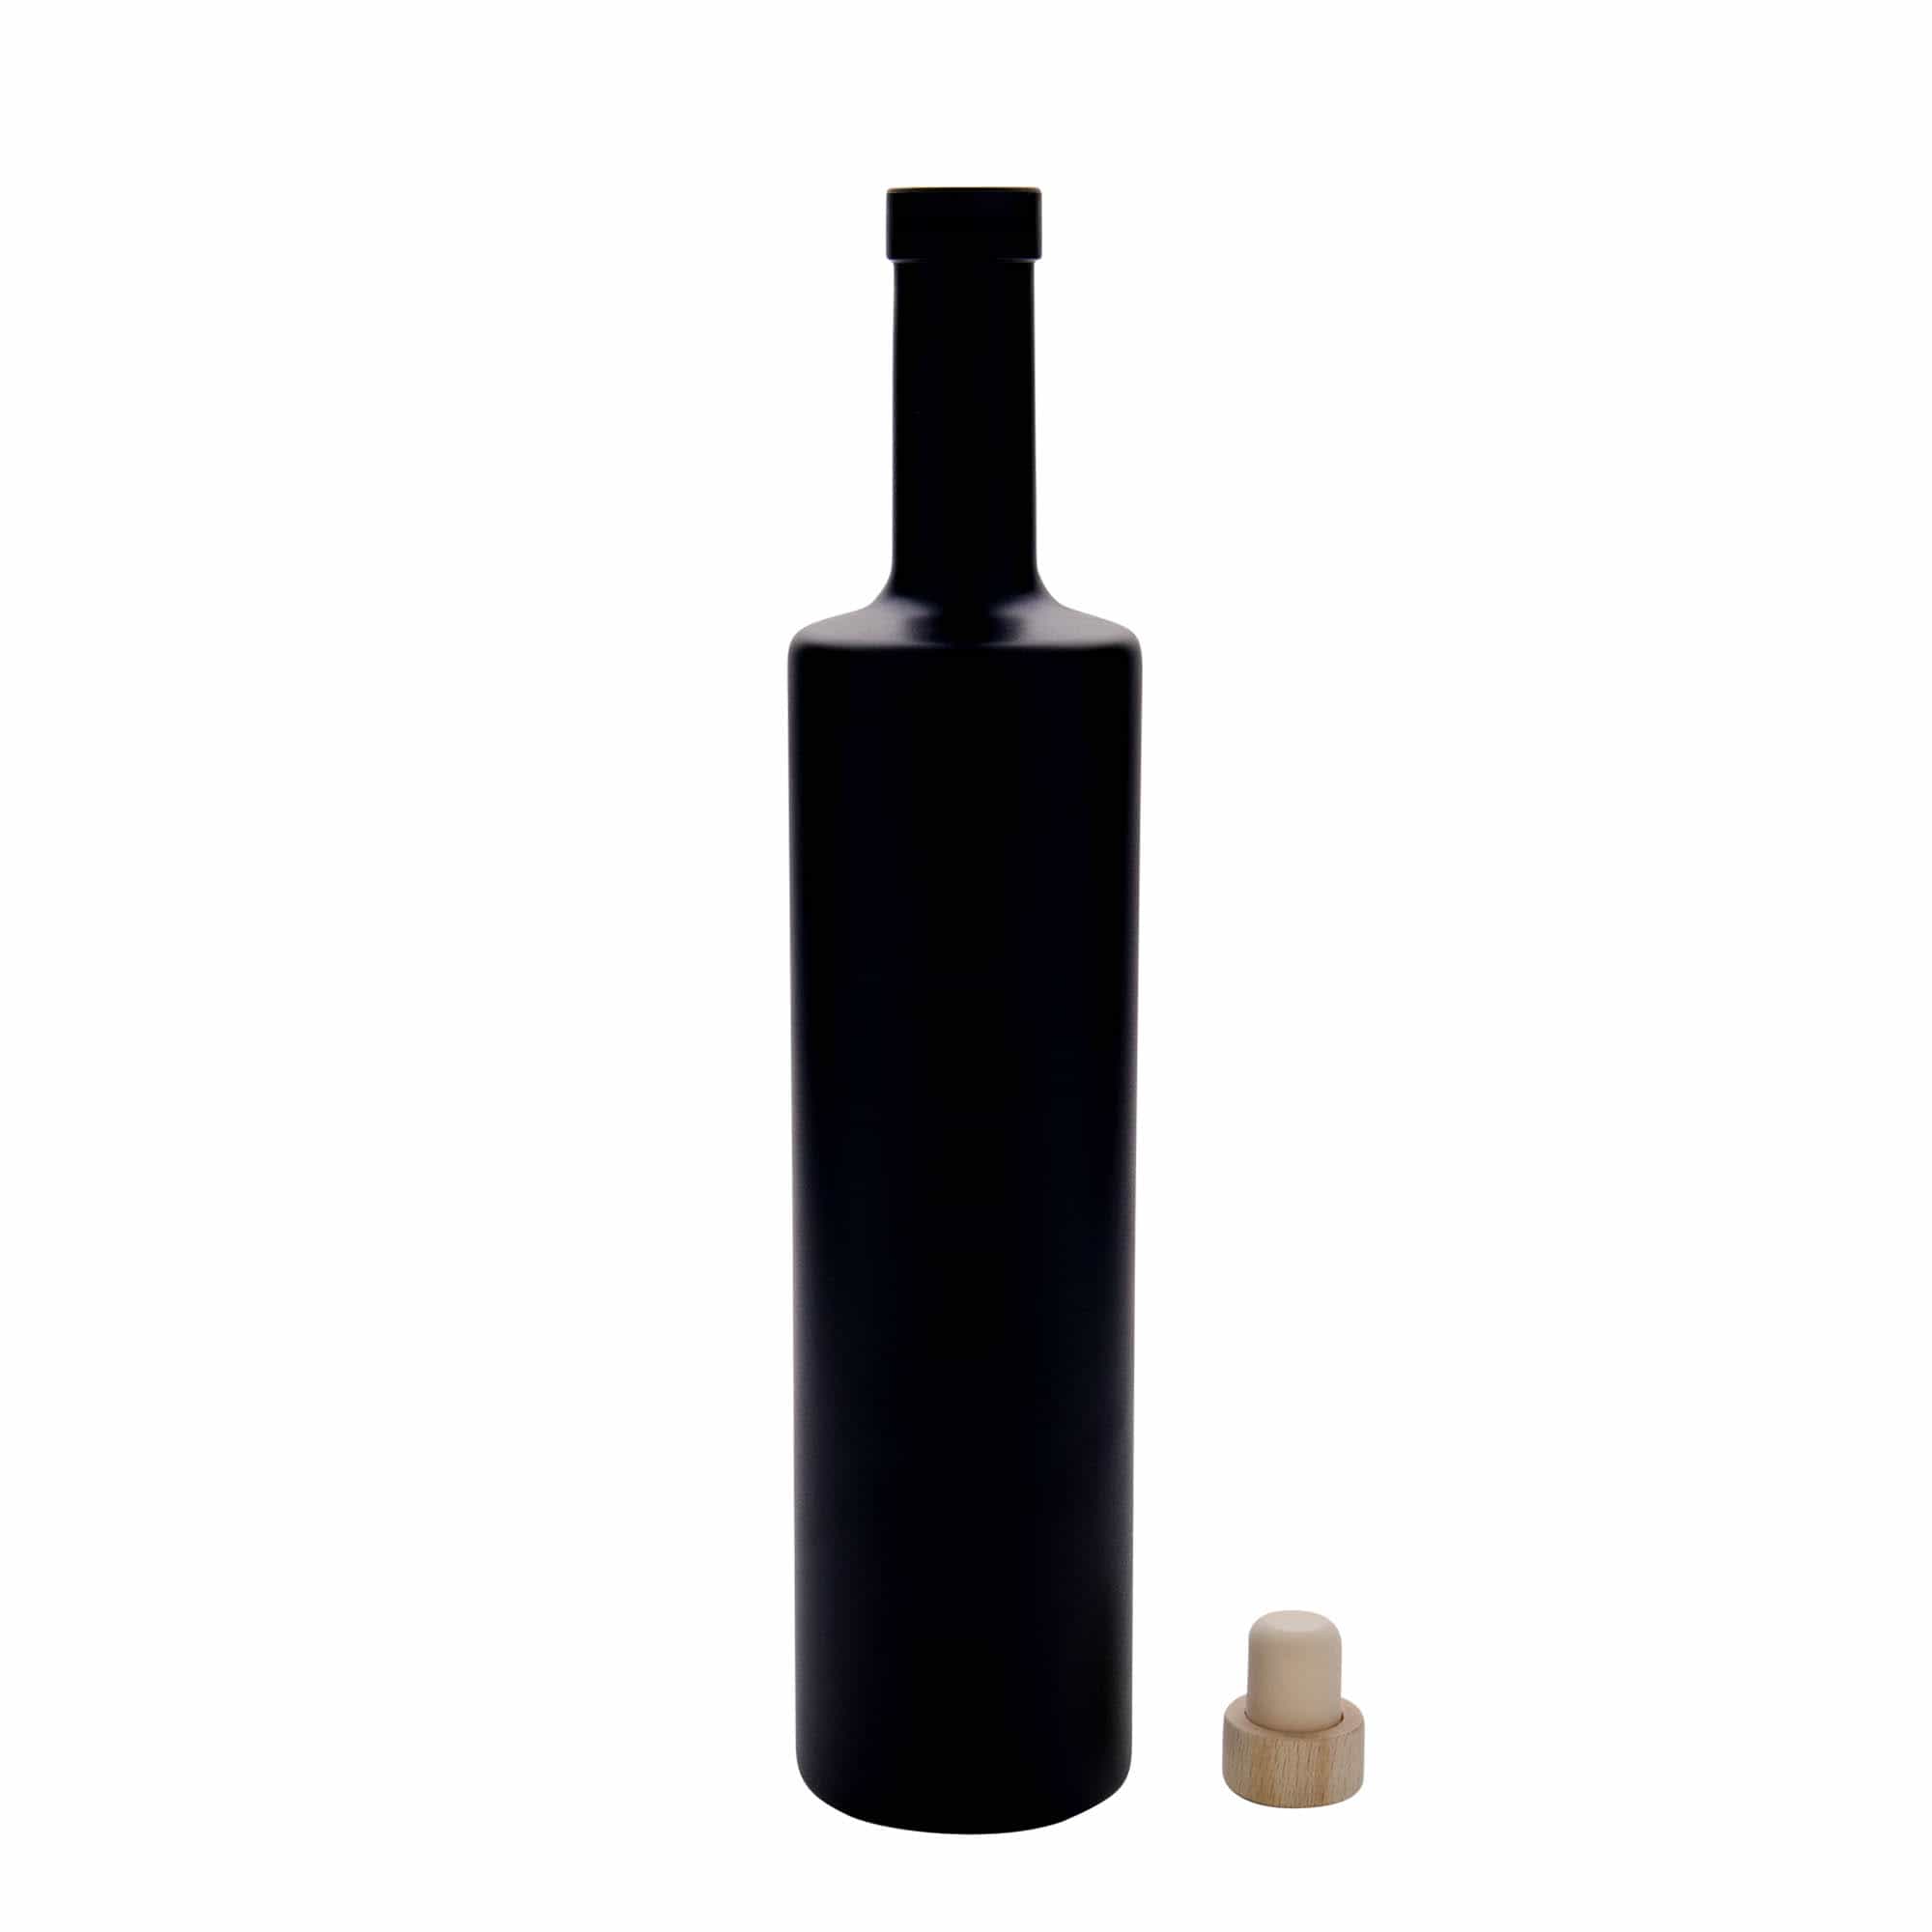 700 ml glass bottle 'Centurio', black, closure: cork